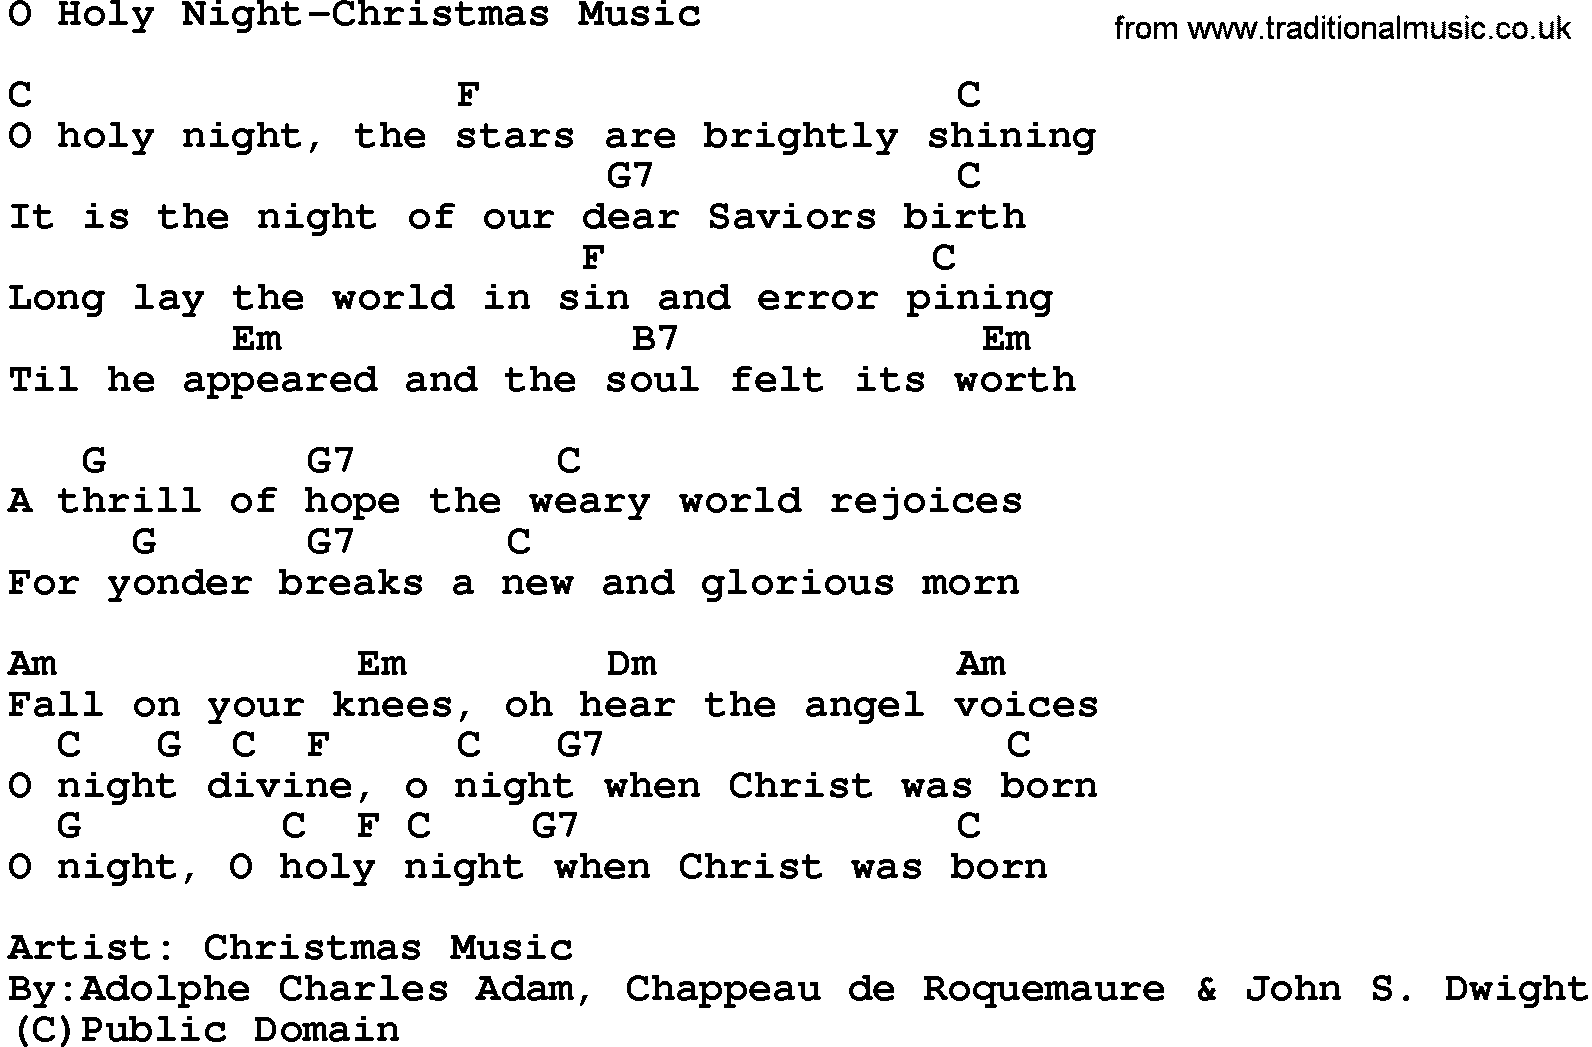 Gospel Song: O Holy Night-Christmas Music, lyrics and chords.